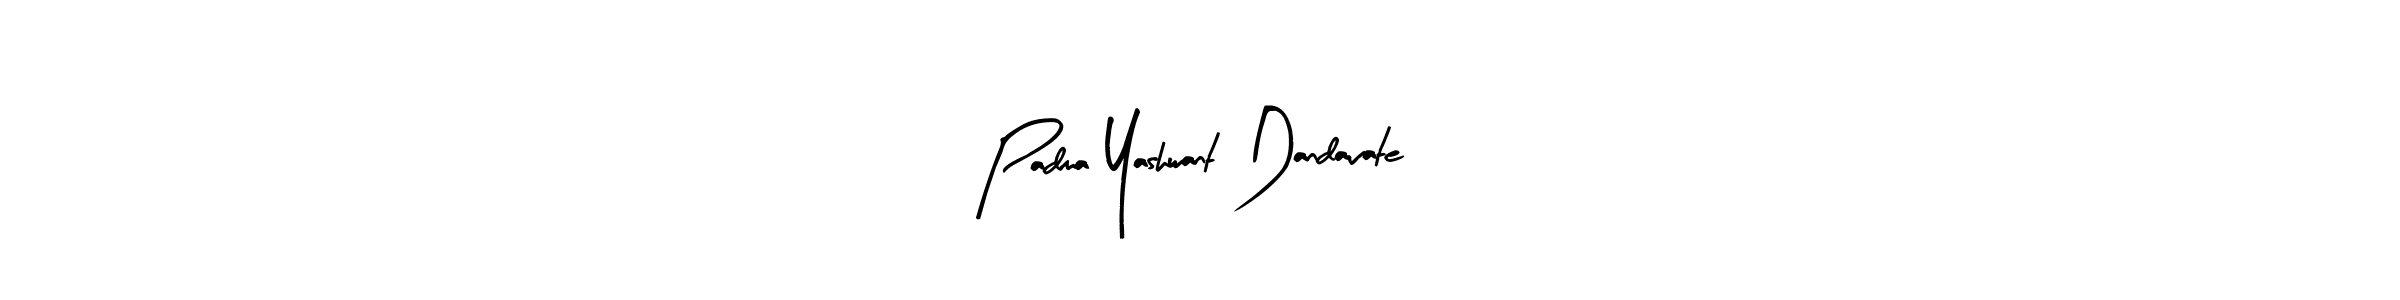 Padma Yashwant Dandavate stylish signature style. Best Handwritten Sign (Arty Signature) for my name. Handwritten Signature Collection Ideas for my name Padma Yashwant Dandavate. Padma Yashwant Dandavate signature style 8 images and pictures png